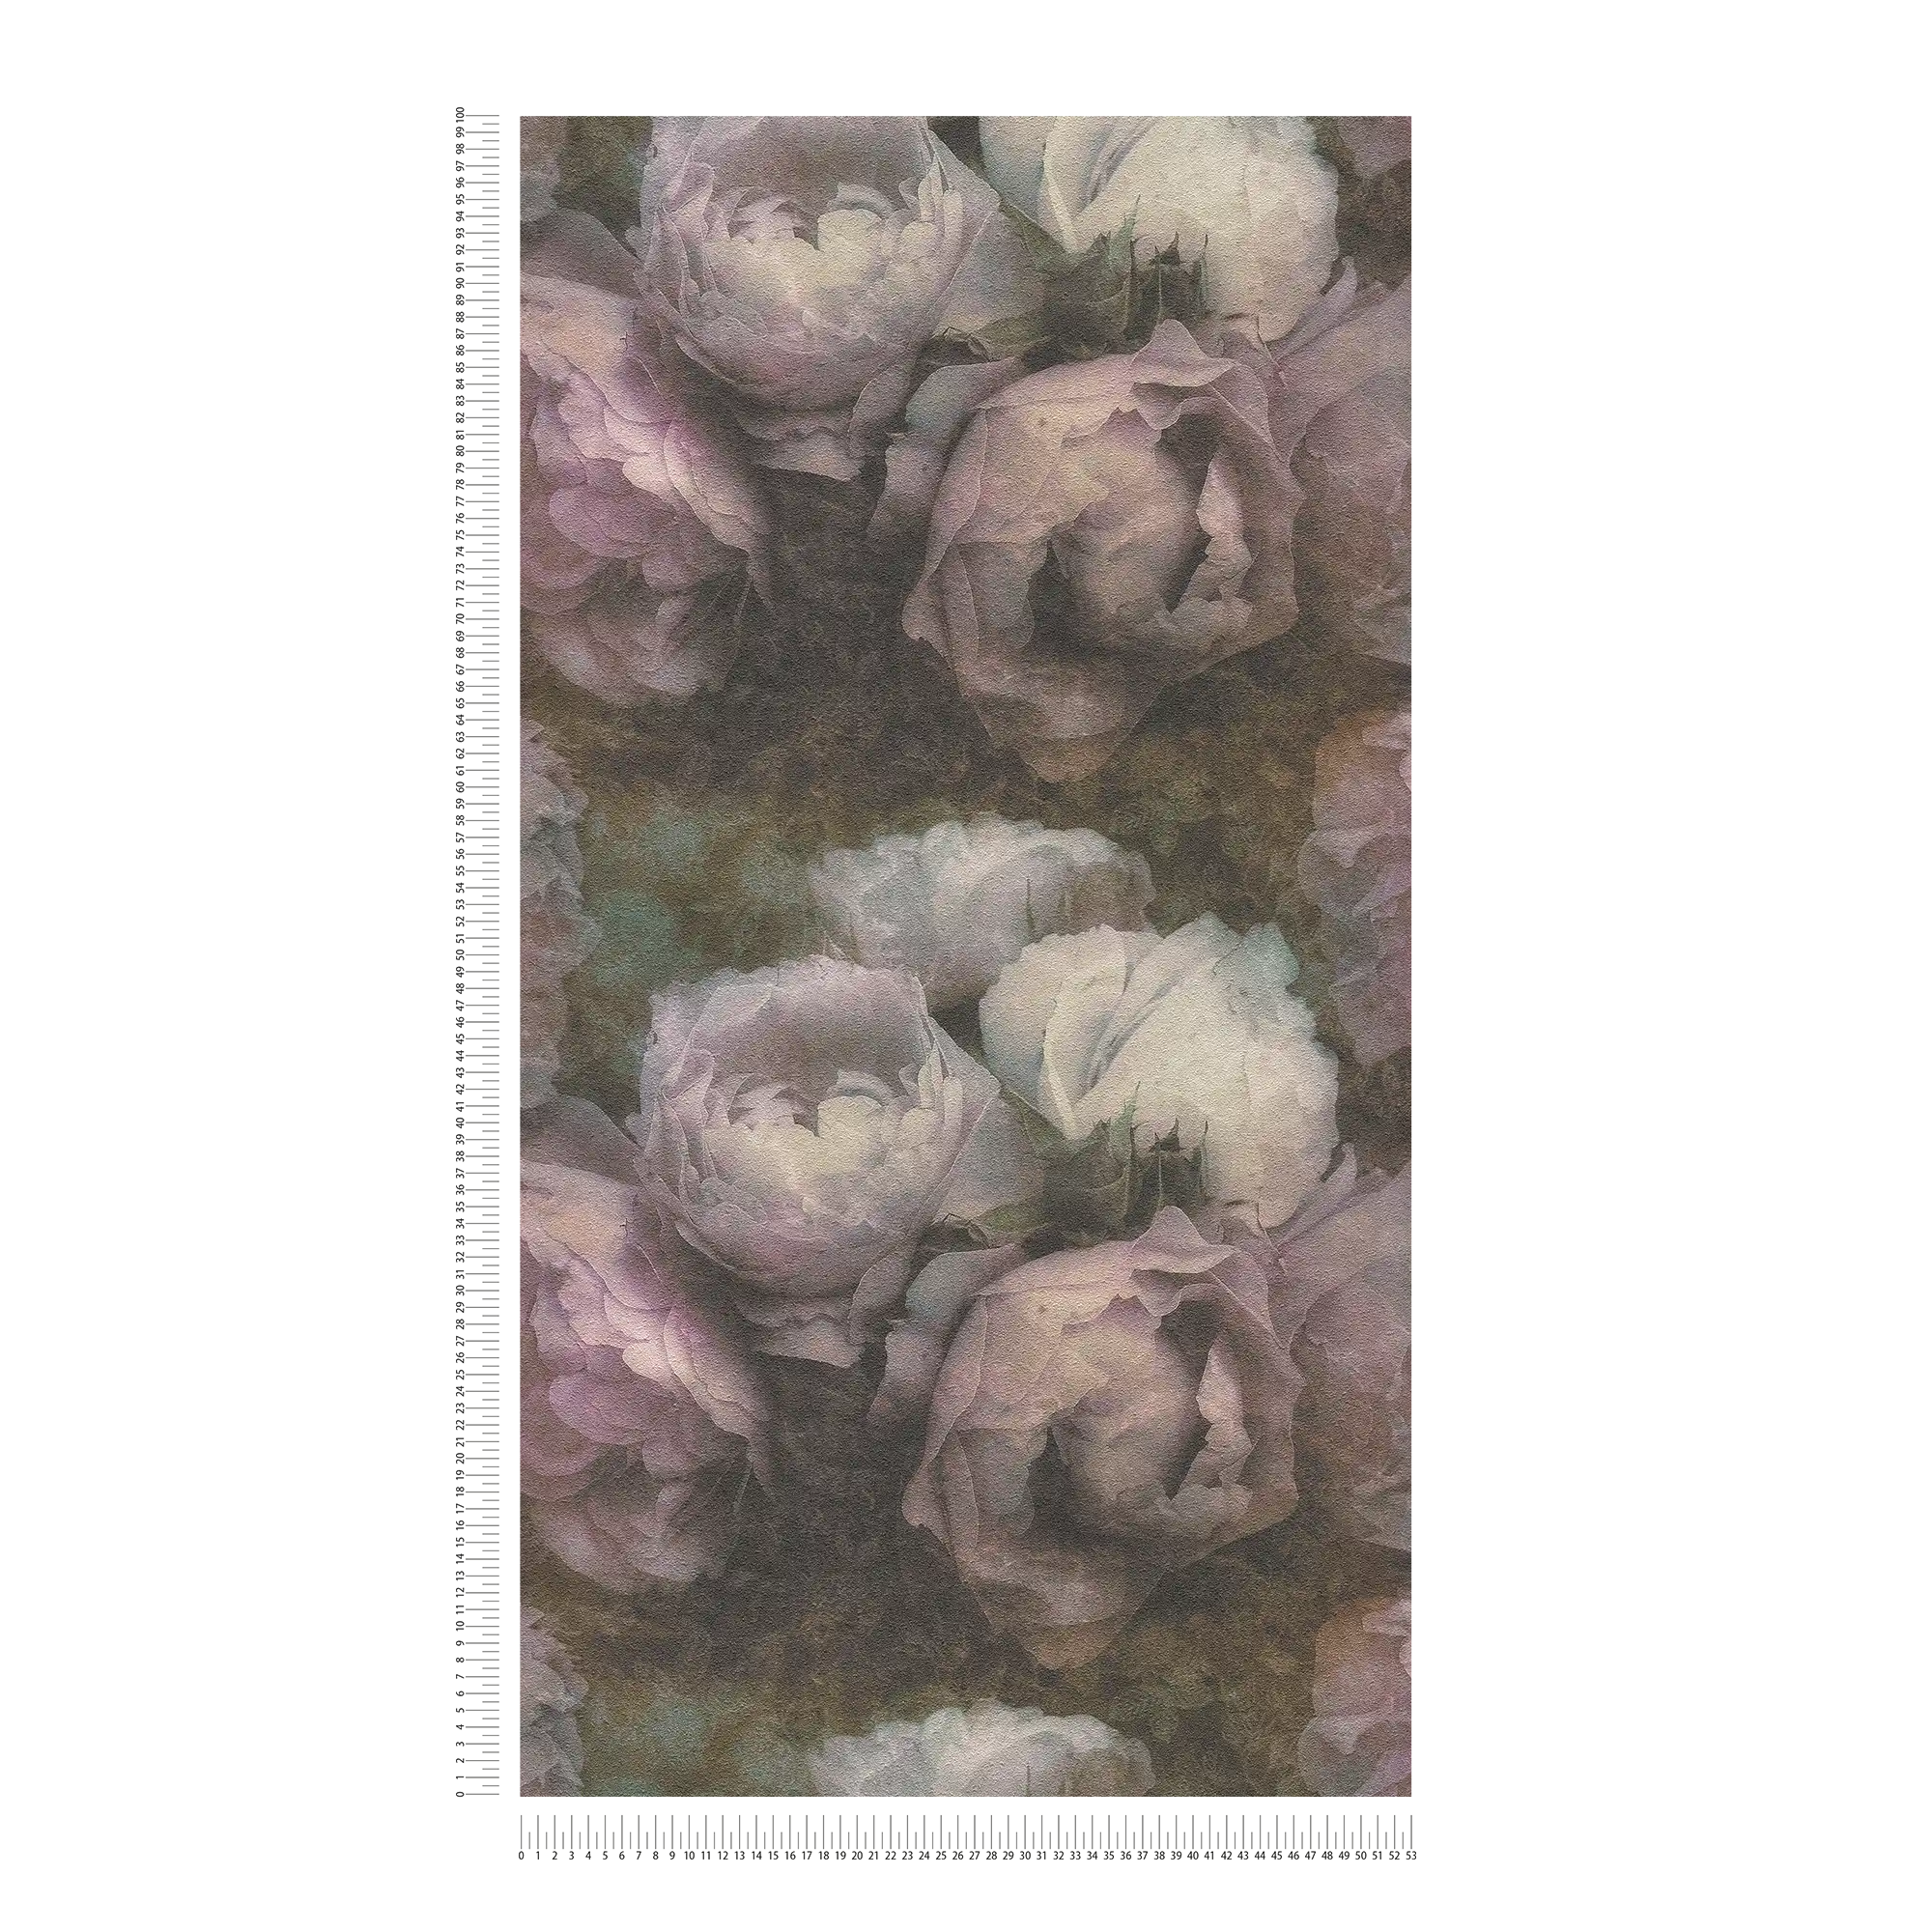             carta da parati con peonie in stile vintage - viola, grigio, bianco
        